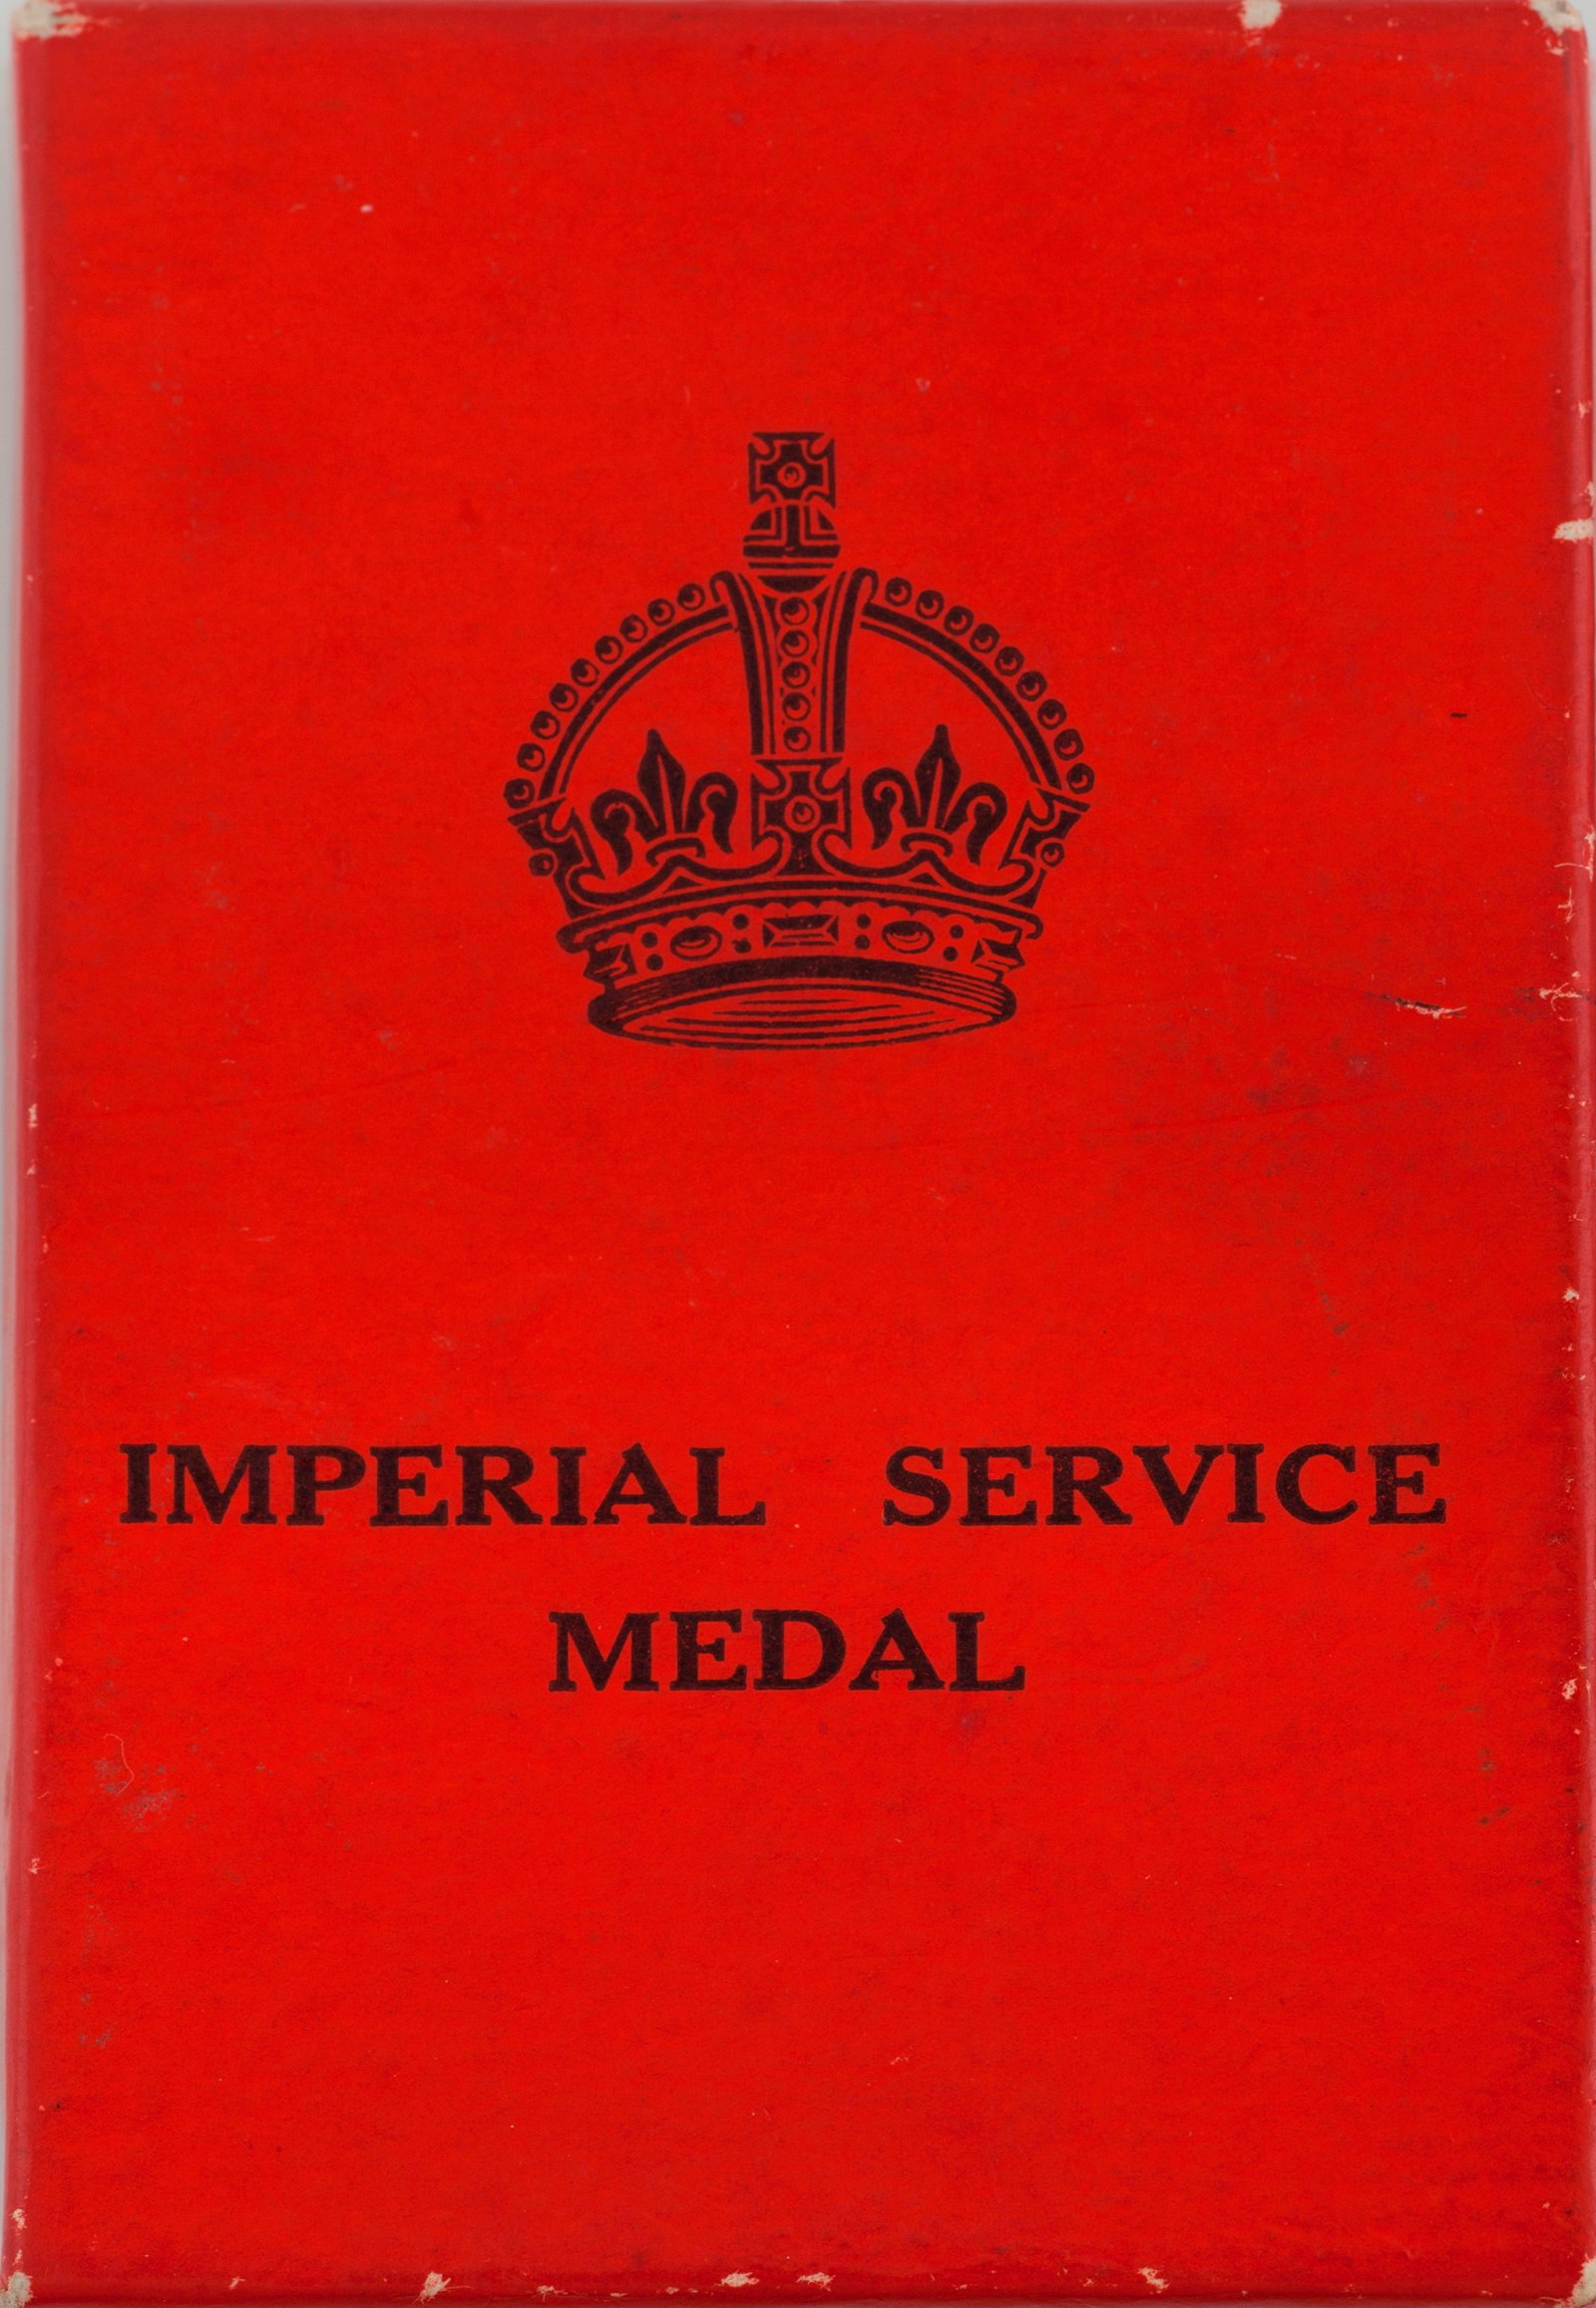 Presentation case for Imperial Service Medal awarded to Sergeant James Johnstone Walsh, 1944